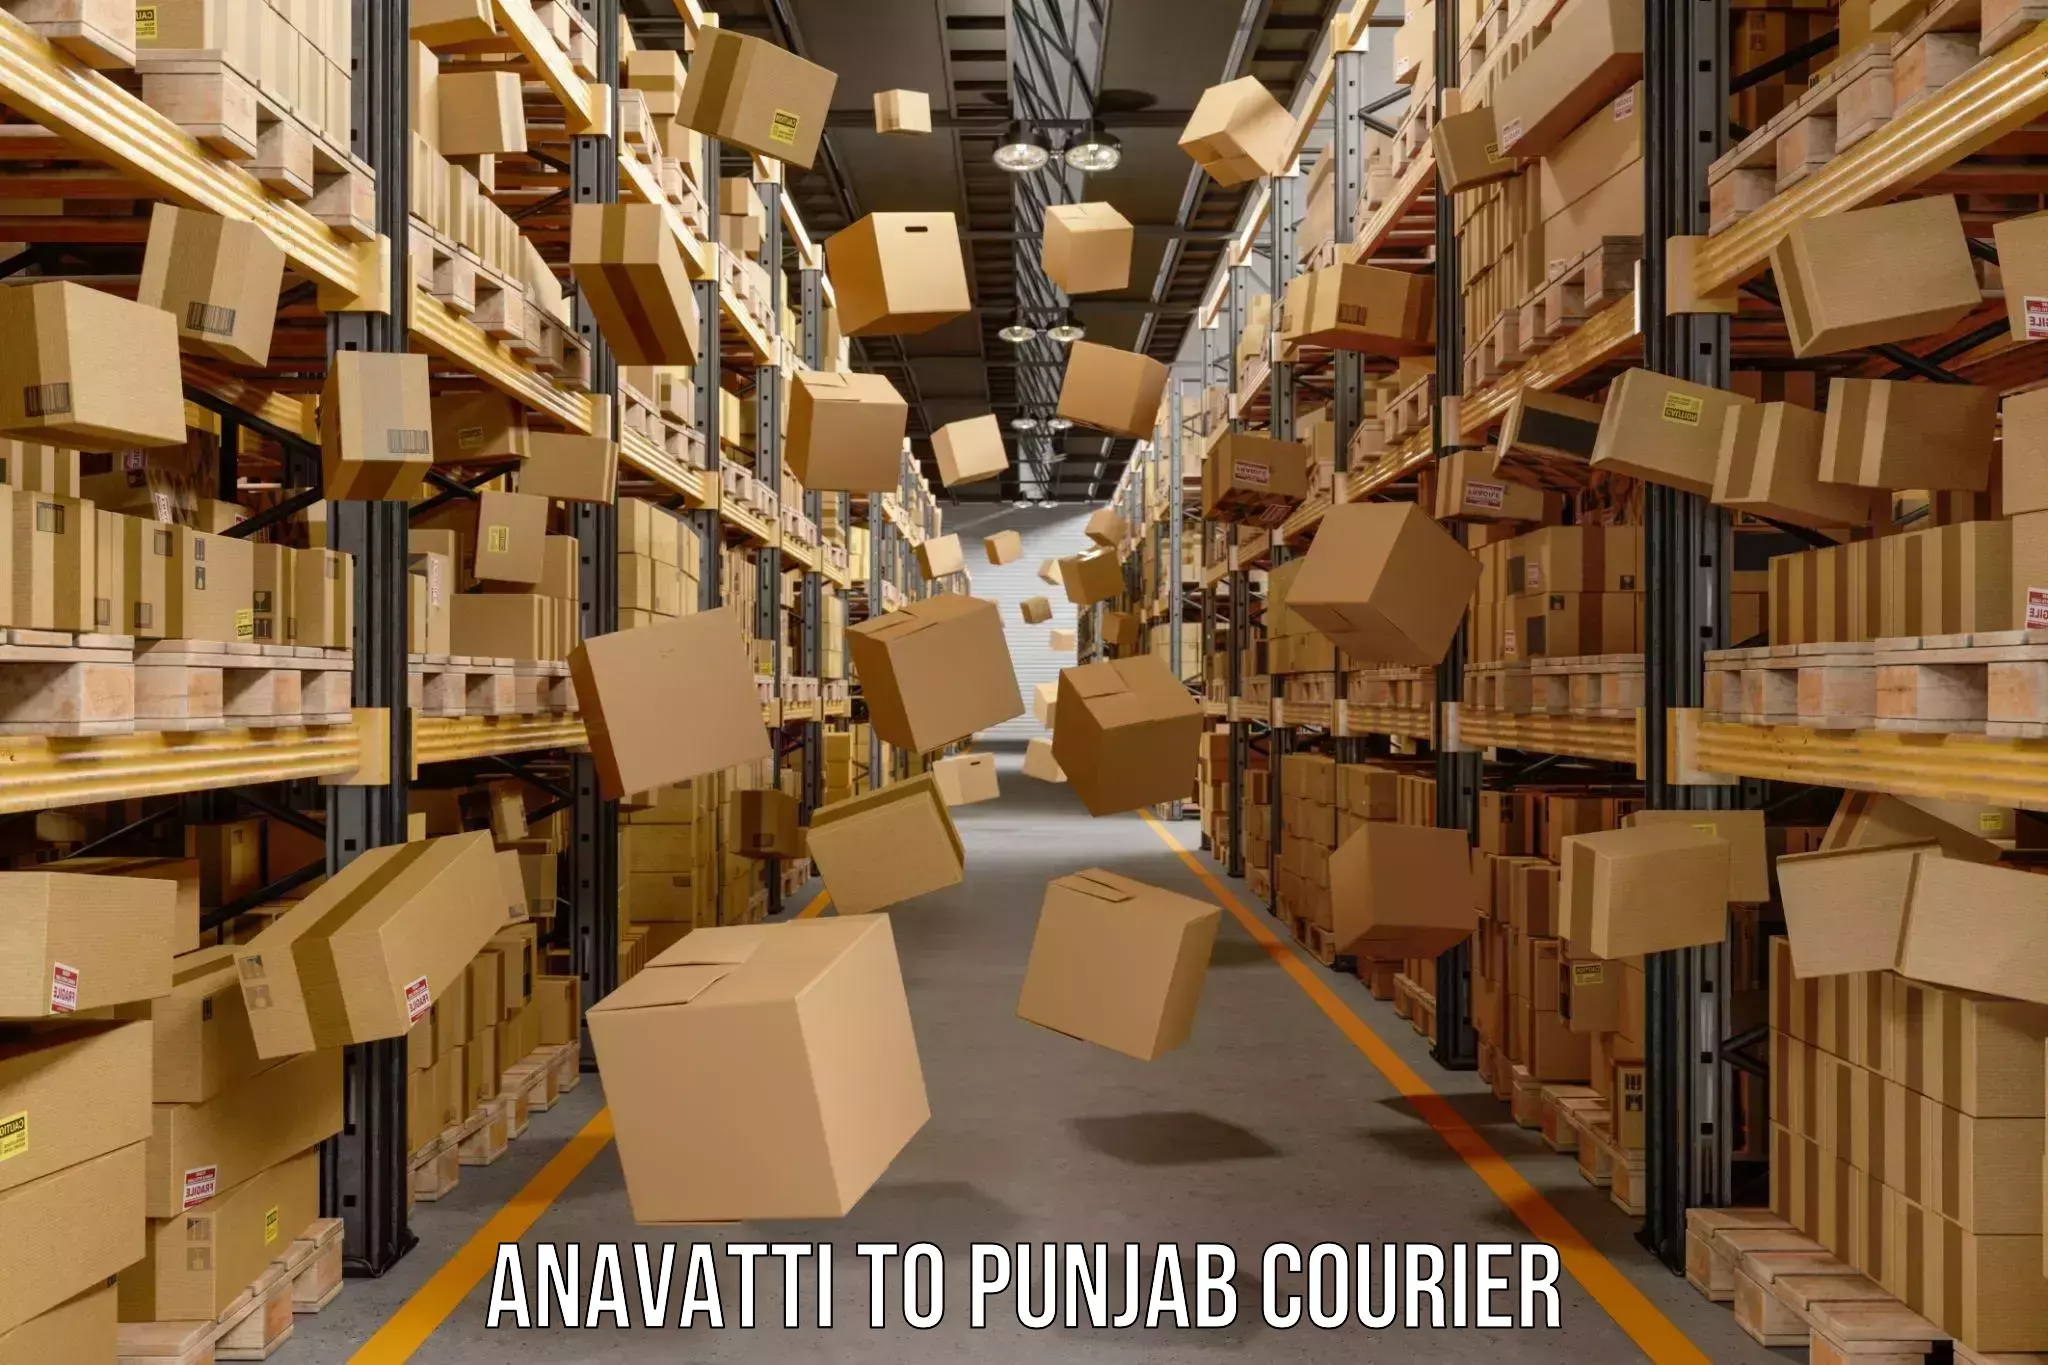 Cash on delivery service Anavatti to Punjab